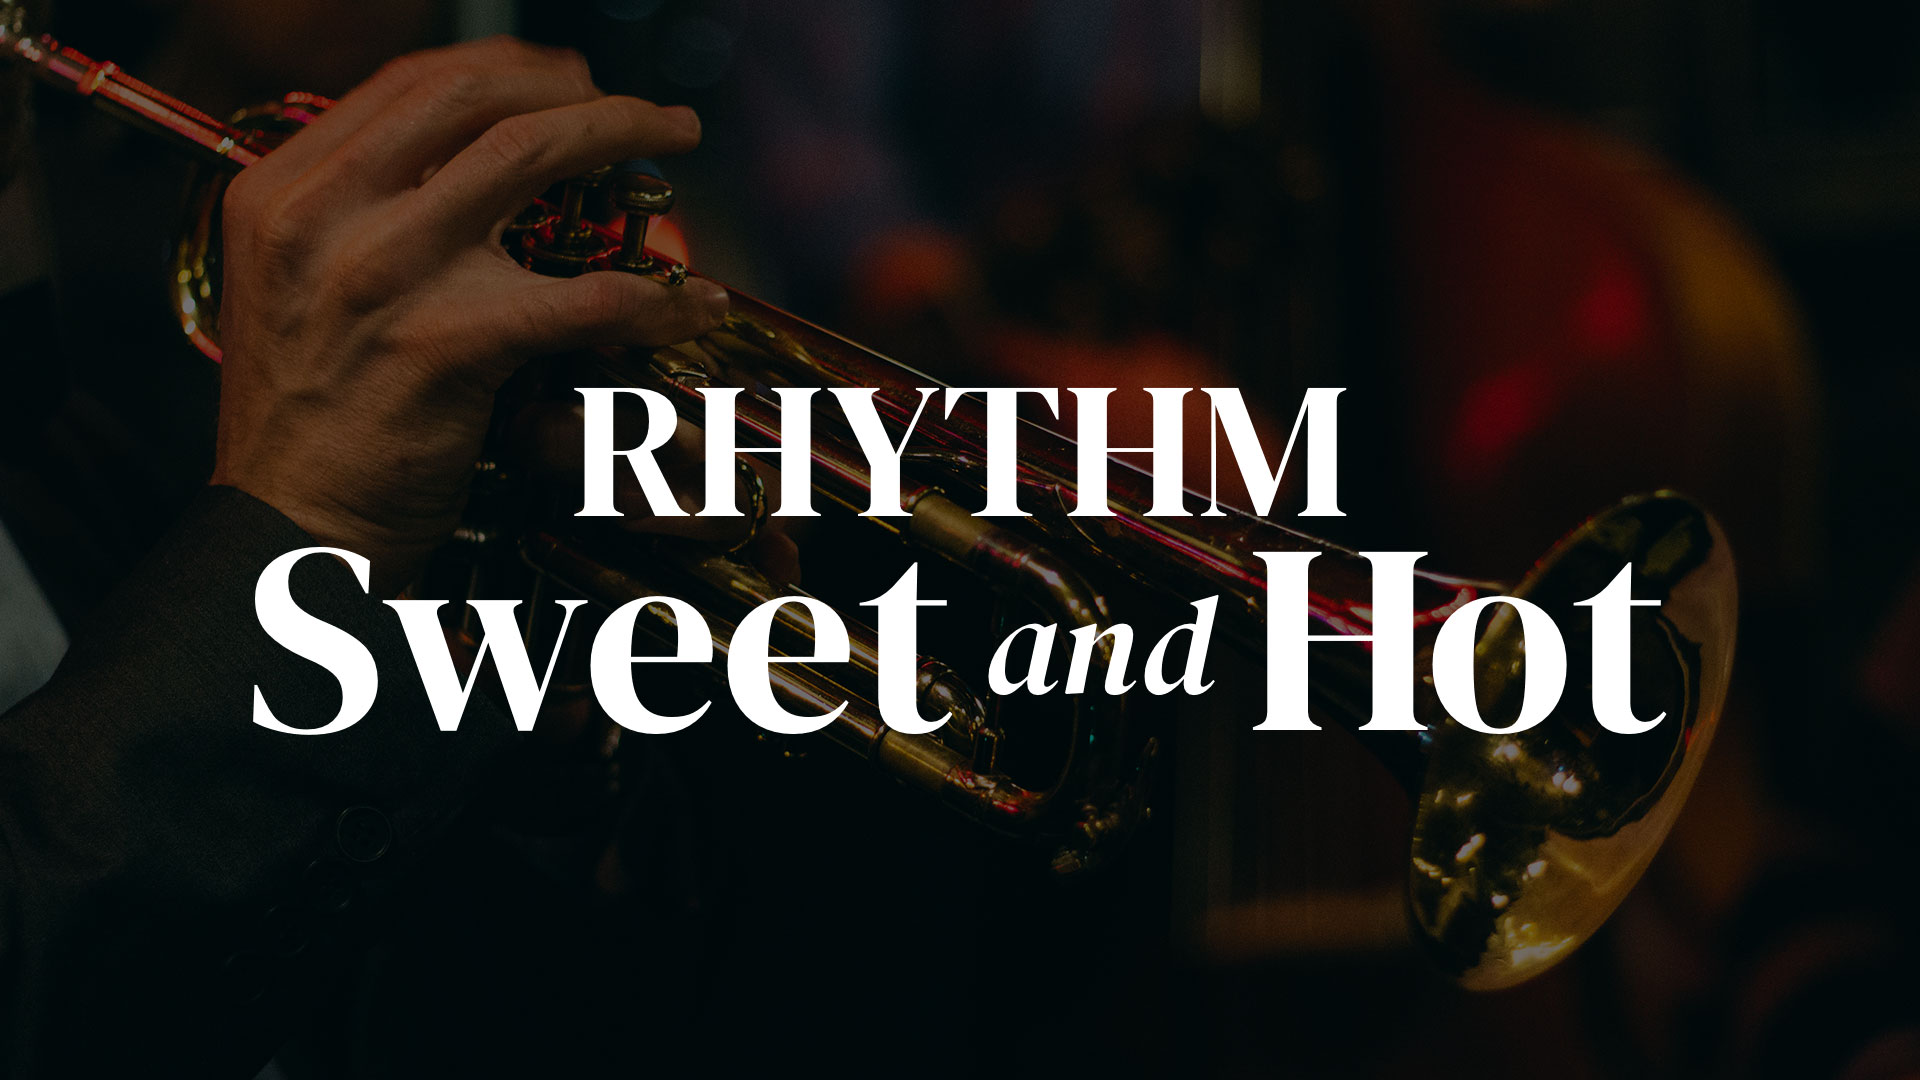 Rhythm Sweet and Hot